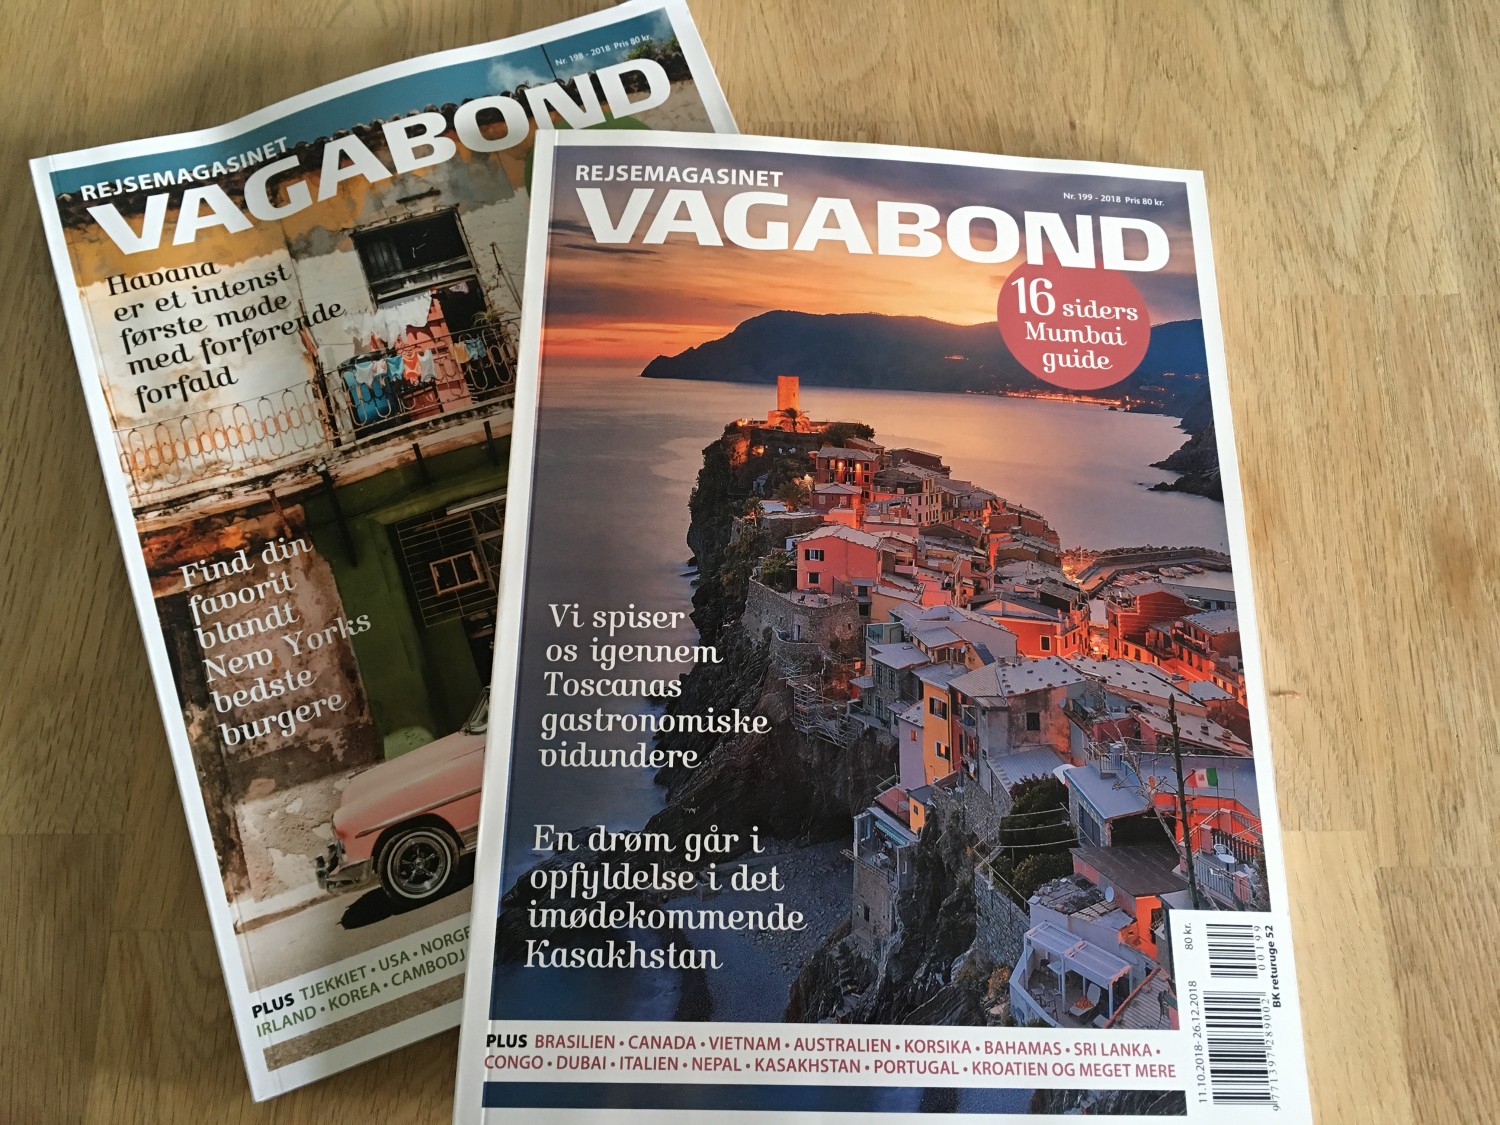 Friday Findings – Rejsemagasinet Vagabond | Friday findings |  globetrotterpaadybtvand